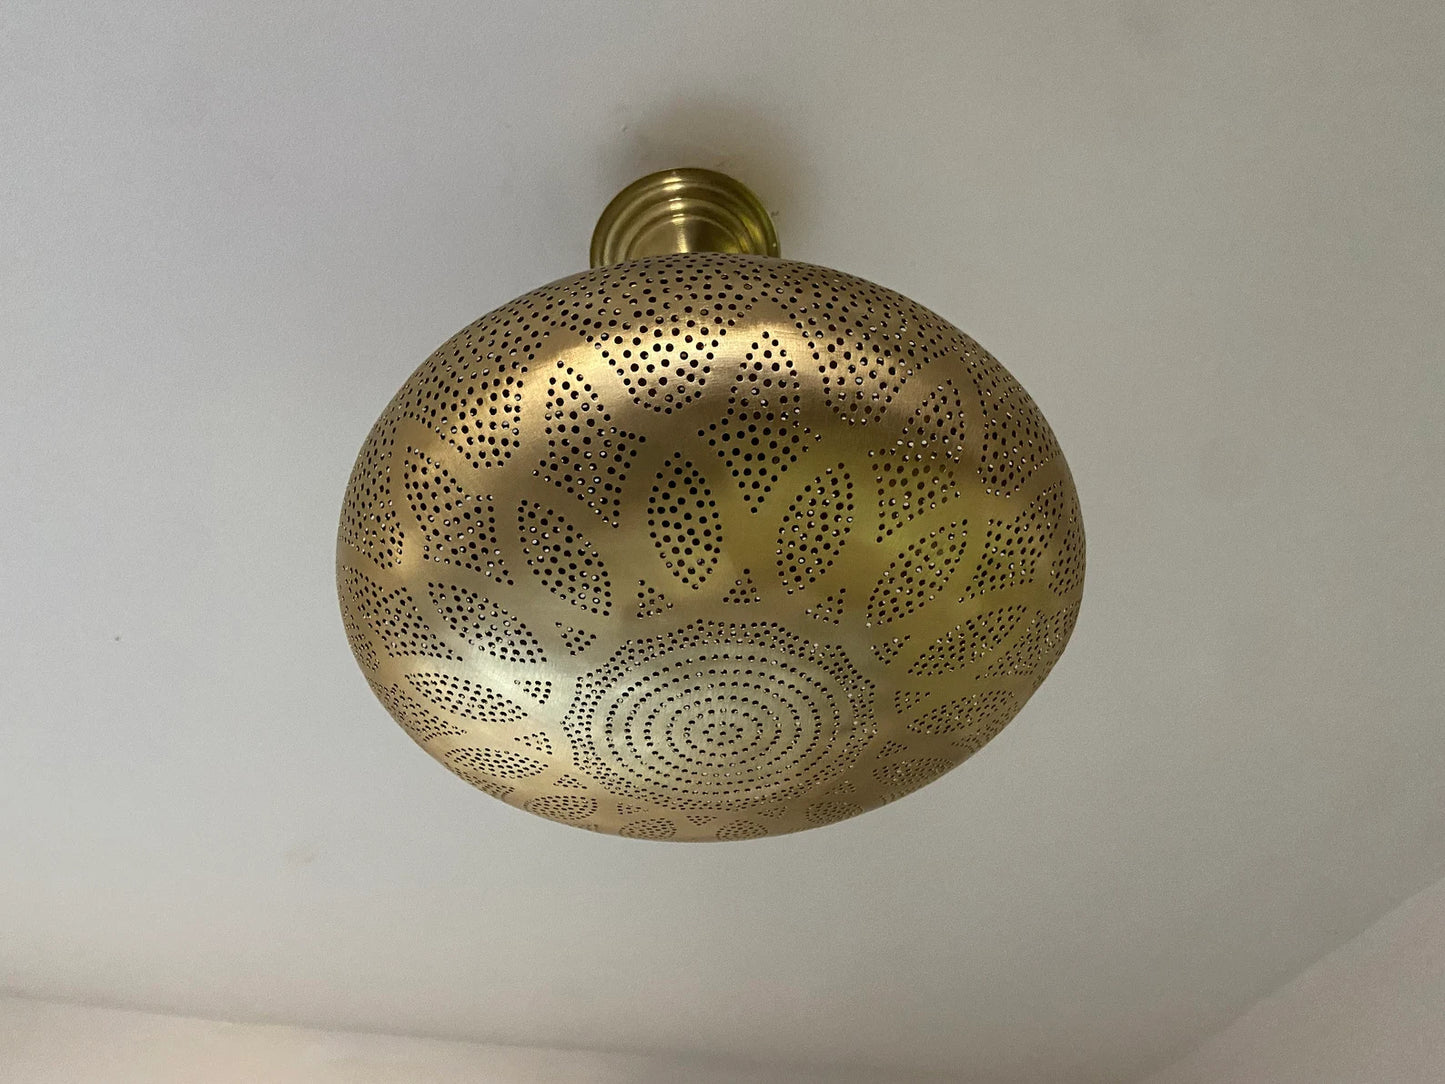 Rustic Moroccan Brass ceiling lamp Hanging Pendant Light Fixture Chandelier Dining Room Kitchen Entryway Living room